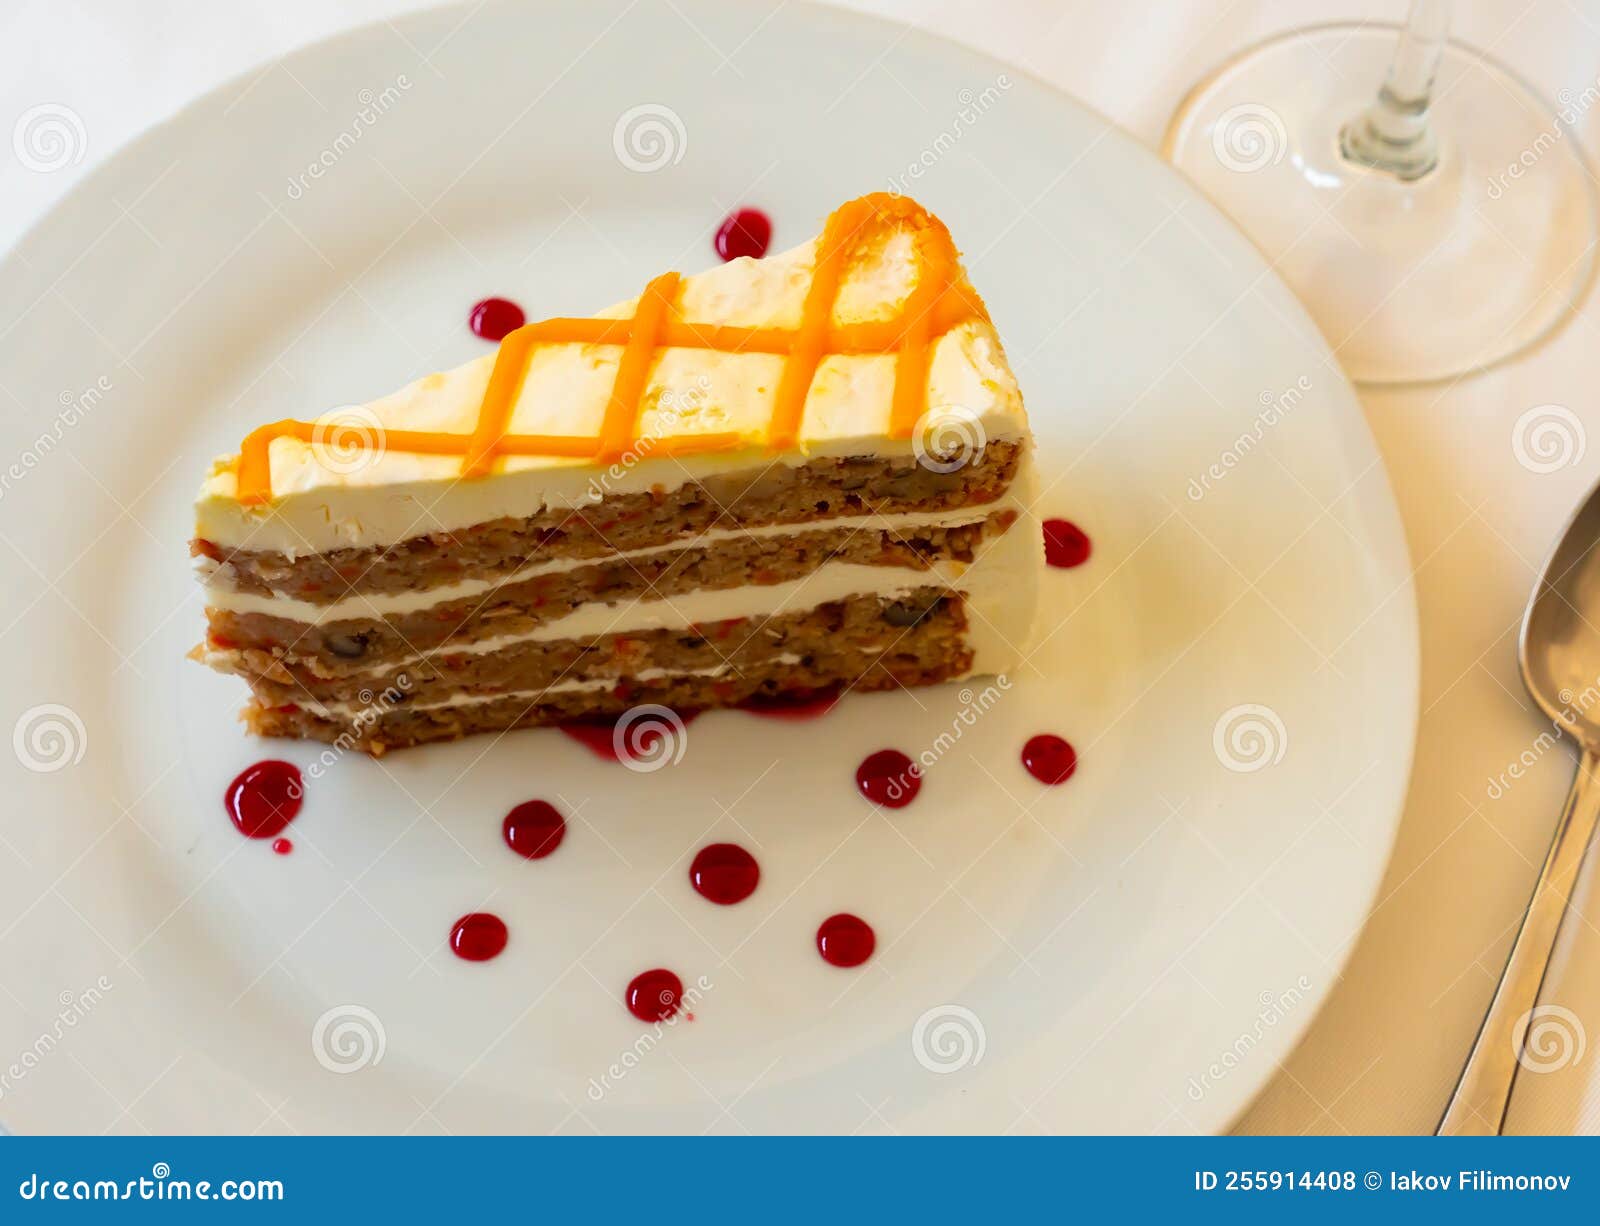 tarta de zanahoria. tender sweet slice of soft carrot cake with cream cheese glaze